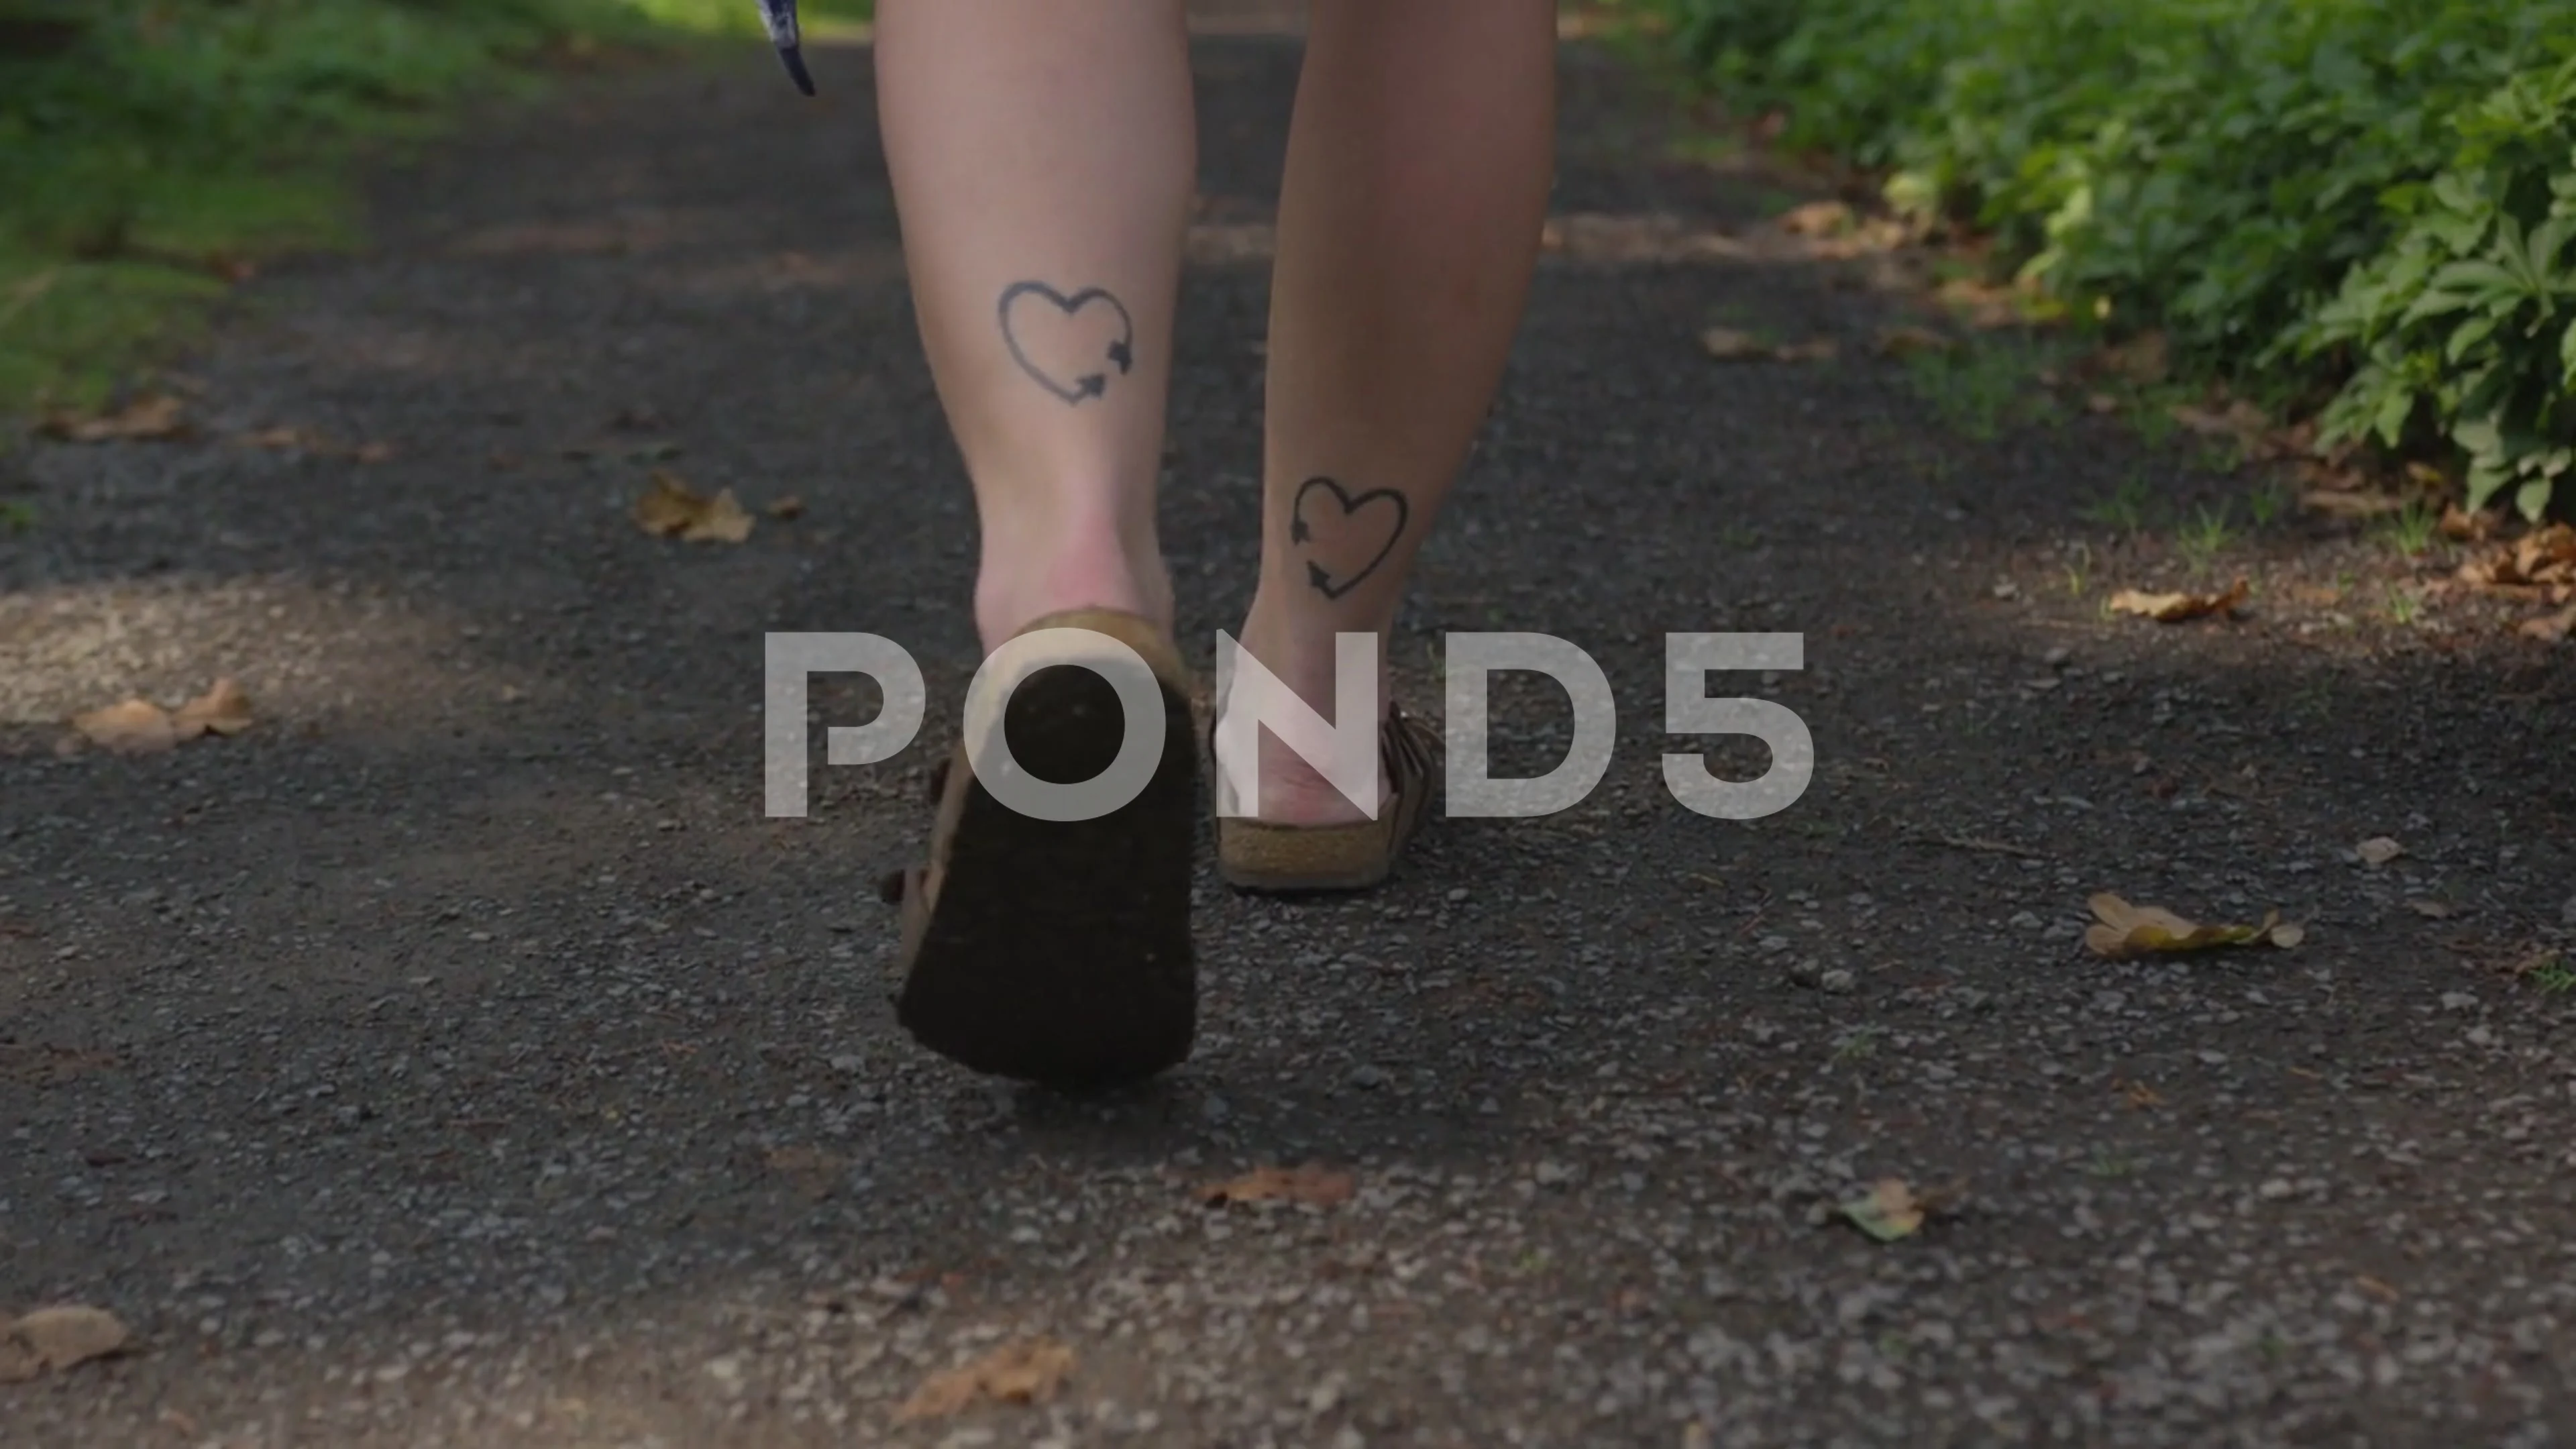 Beautiful Leg Tattoos for Girls - New Designs - Tattoos for Girls | Leg  tattoos women, Girl leg tattoos, Flower leg tattoos